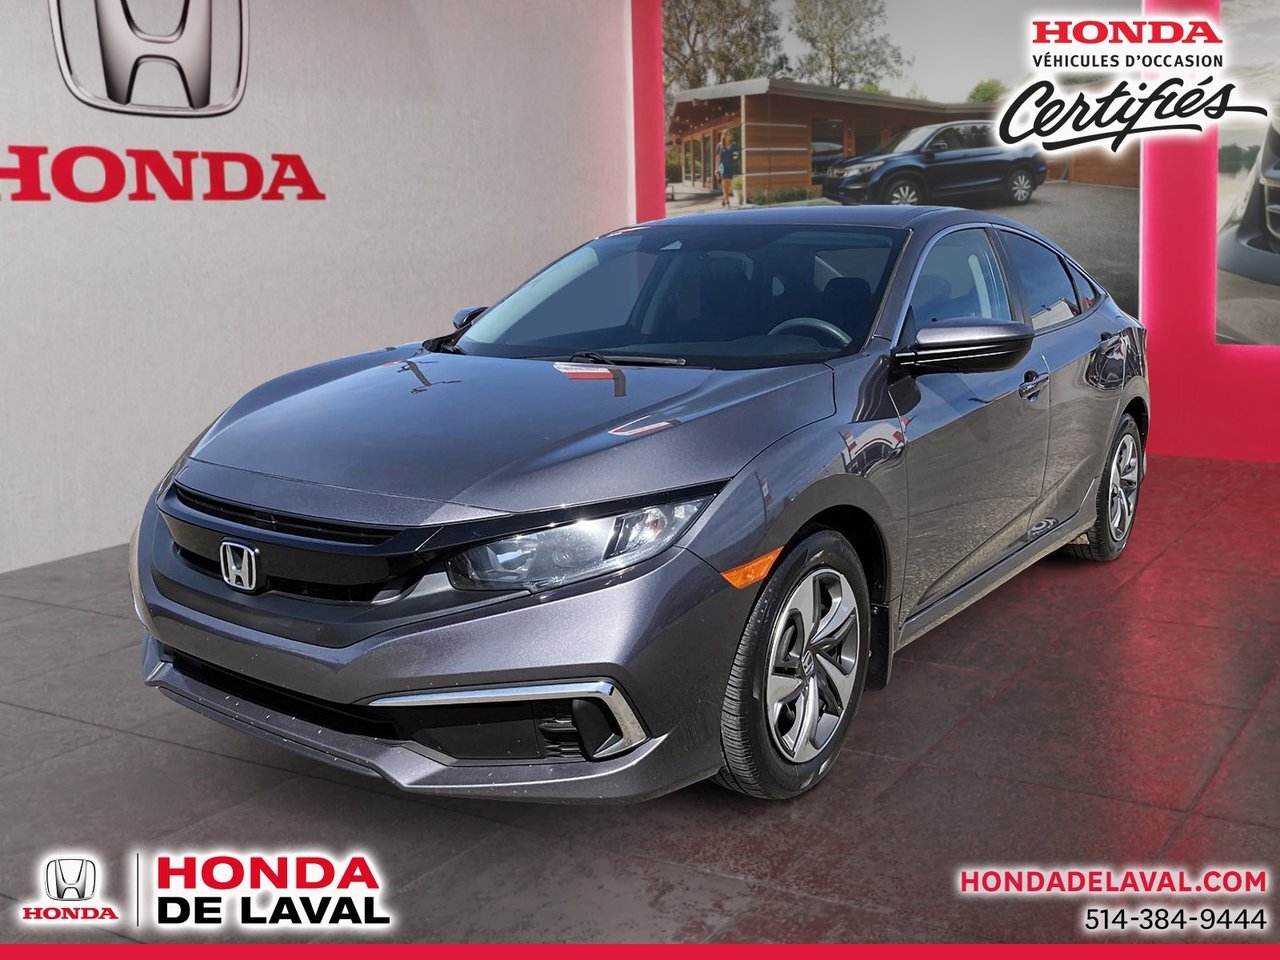 2019 Honda Civic LX garantie globale 8 ans ou 130.000 km honda